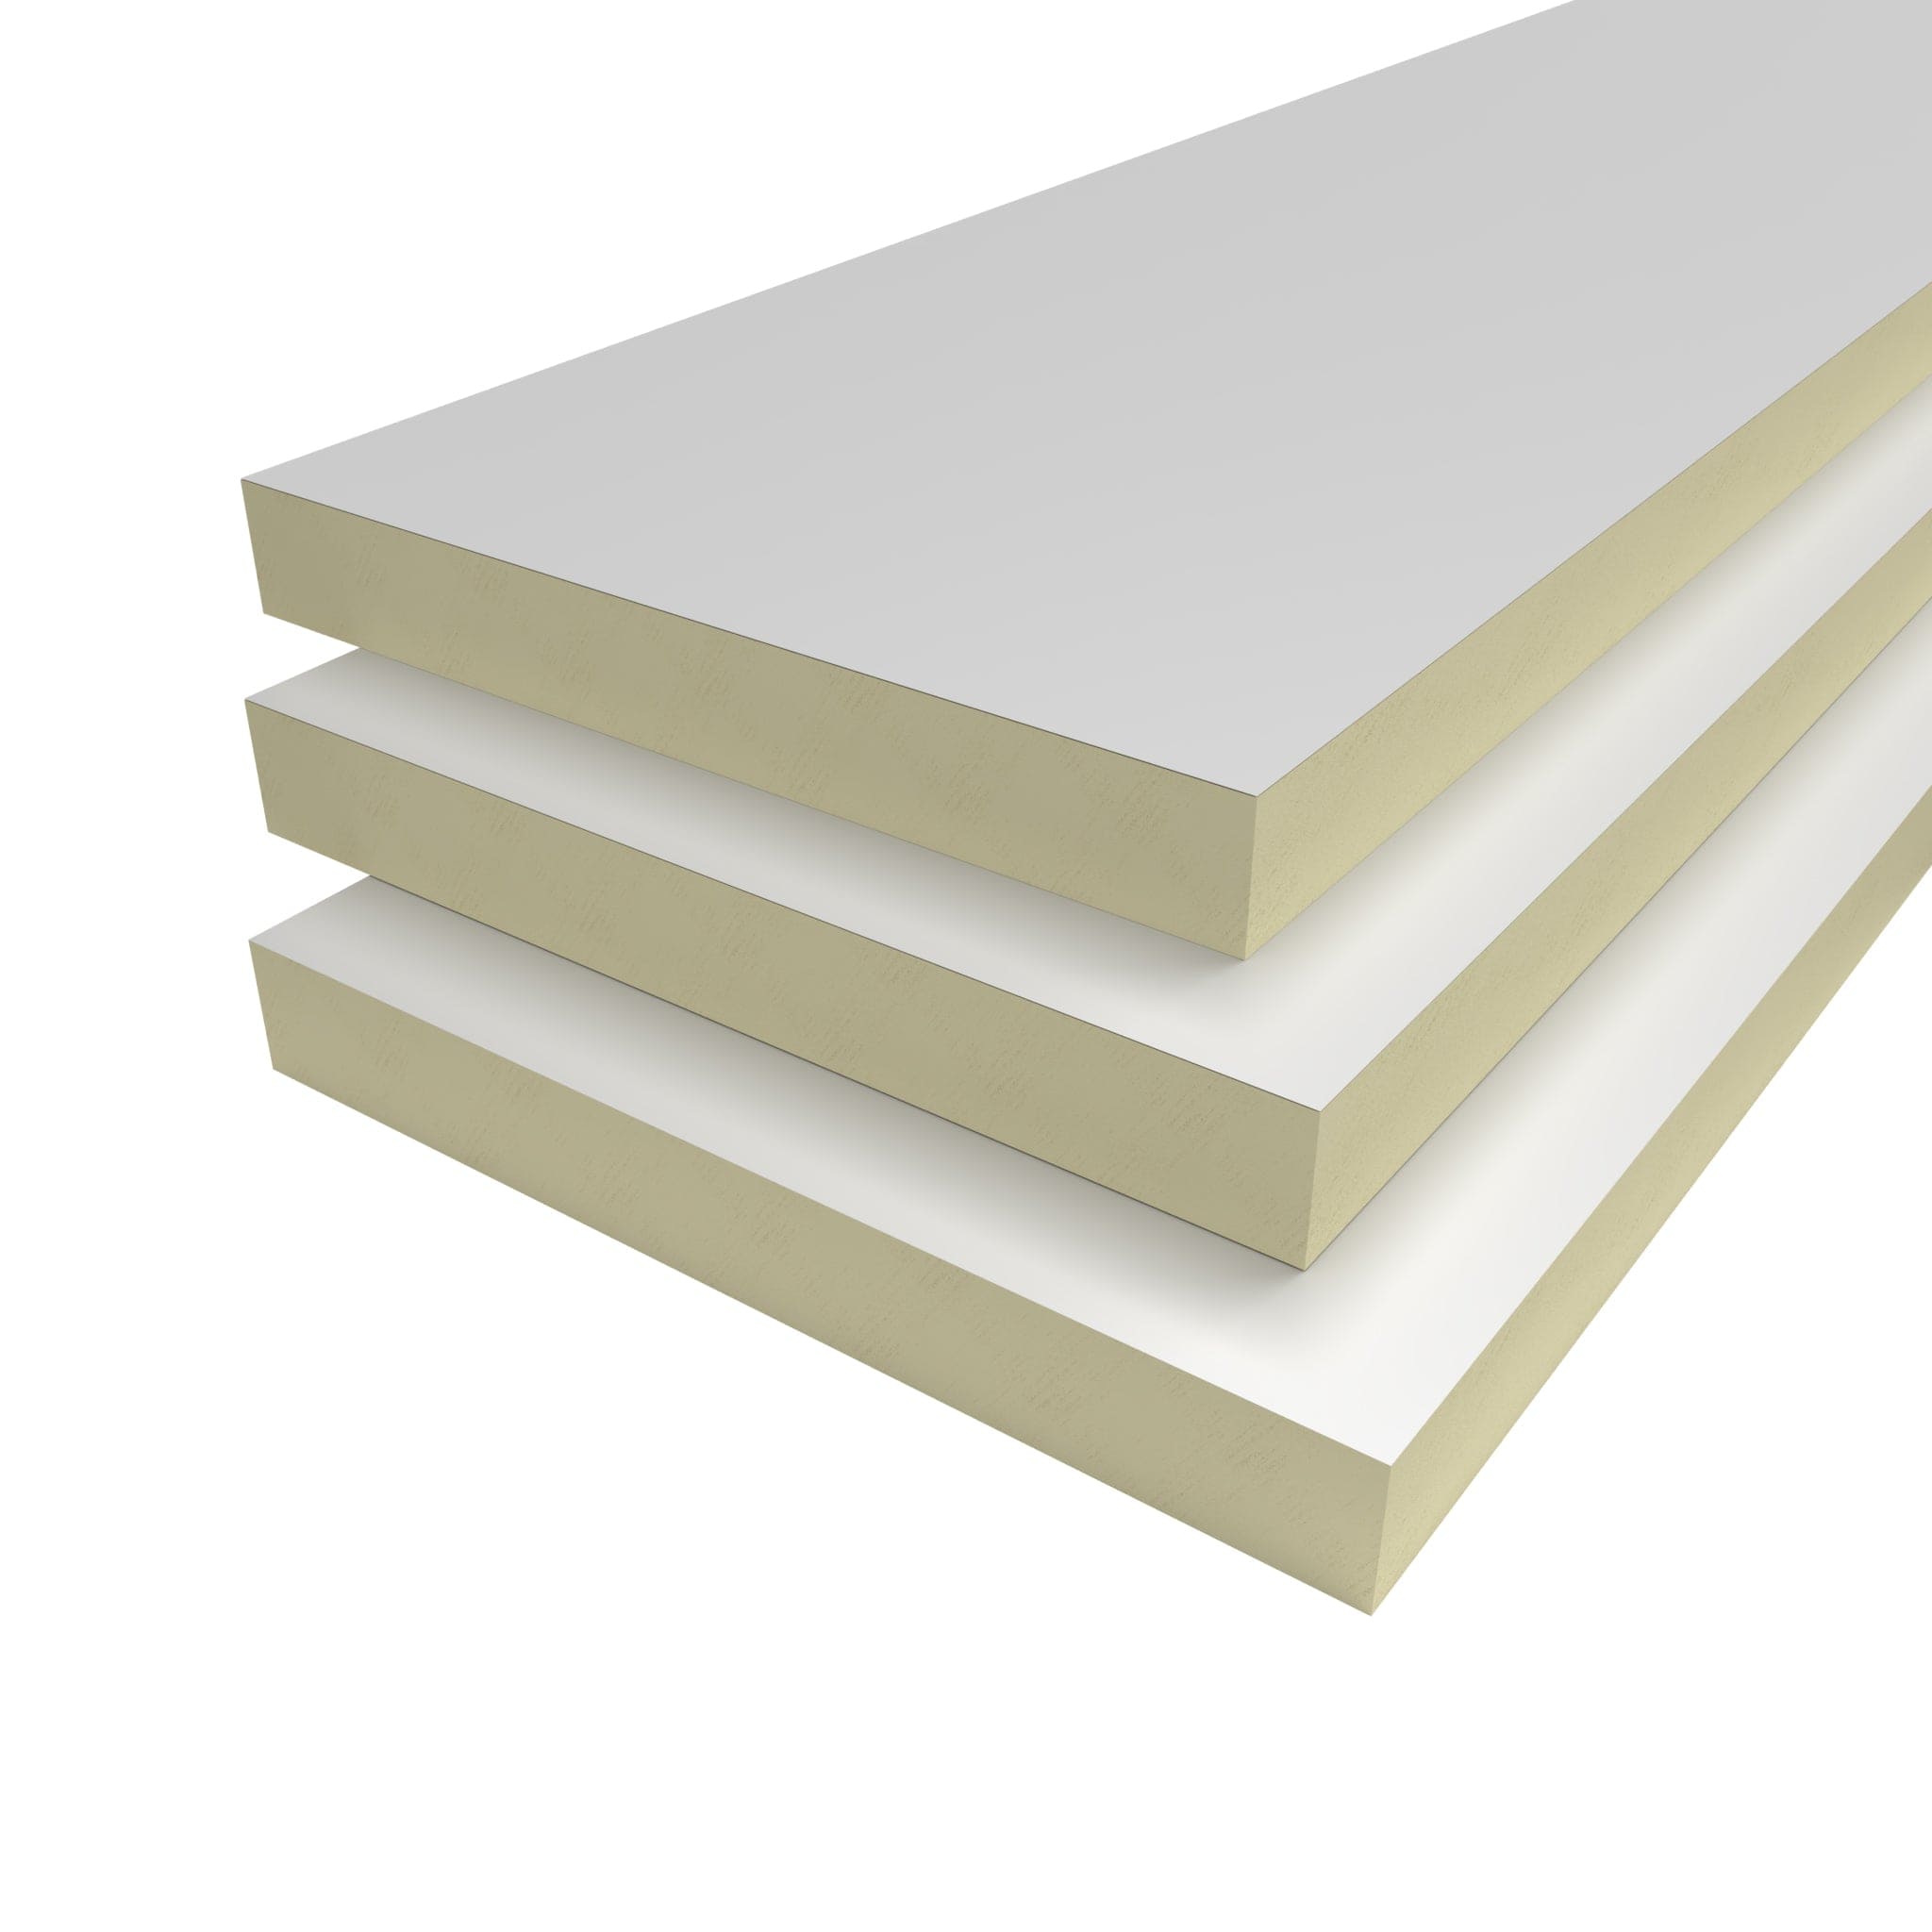 InsulationUK Pir Insulation Strips PIR Insulation Strips | 2400mm x 400mm | Pack of 3 PIR Board Strip 2400mm x 400mm | insulationuk.co.uk